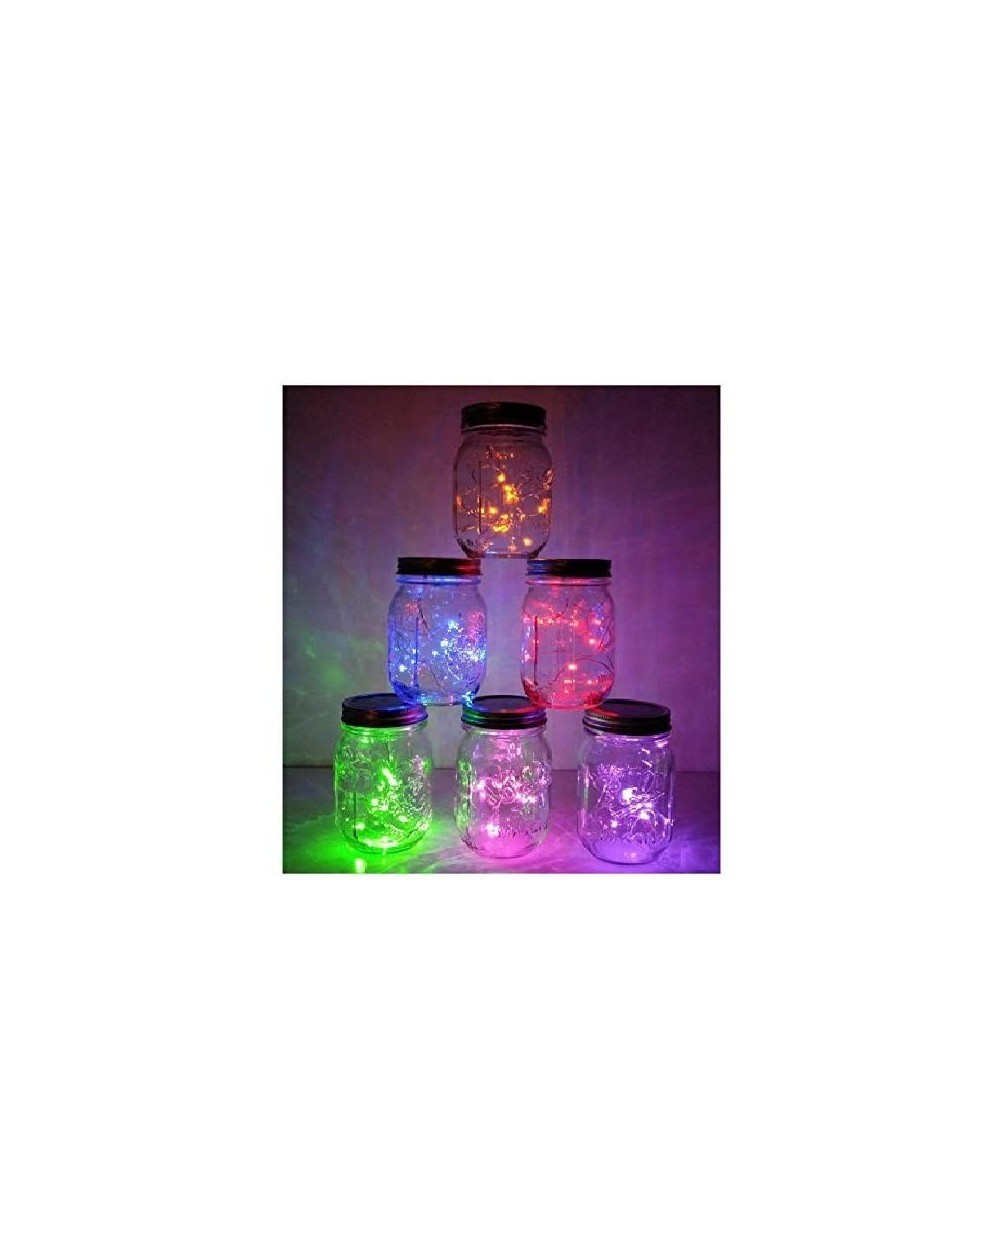 Indoor String Lights 6 Pack Mason Jar Lights- 20 LED Solar Multi-Colored Fairy String Lights Lids Insert for Garden Deck Pati...